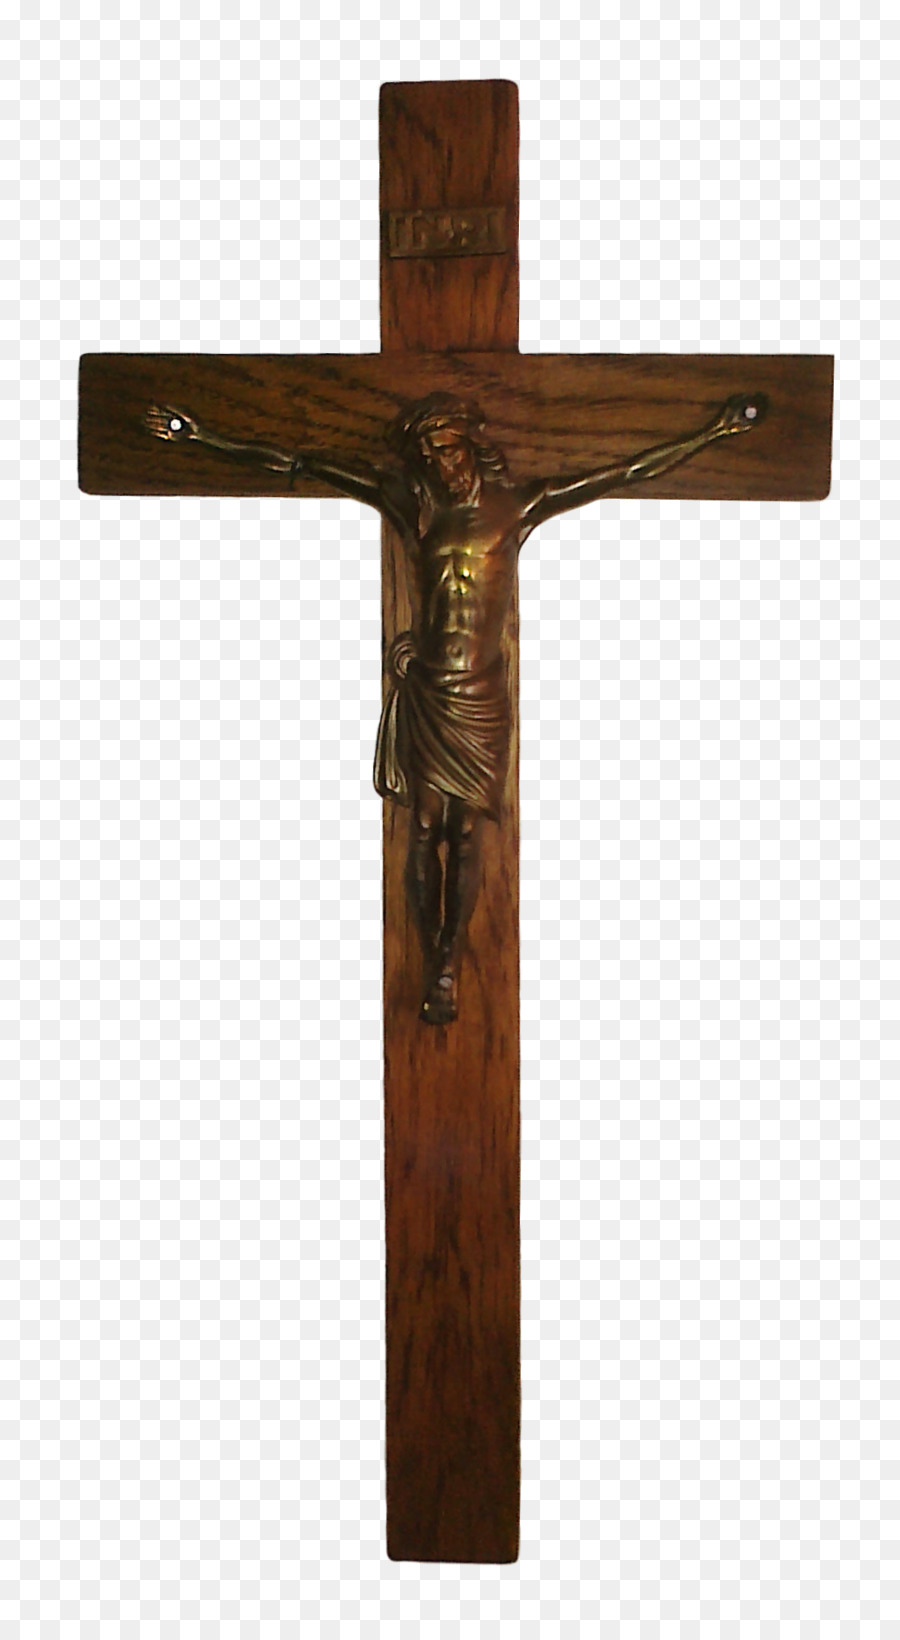 Cross Crucifix Wood Clip art - Jesus png download - 1032*1866 - Free Transparent Cross png Download.